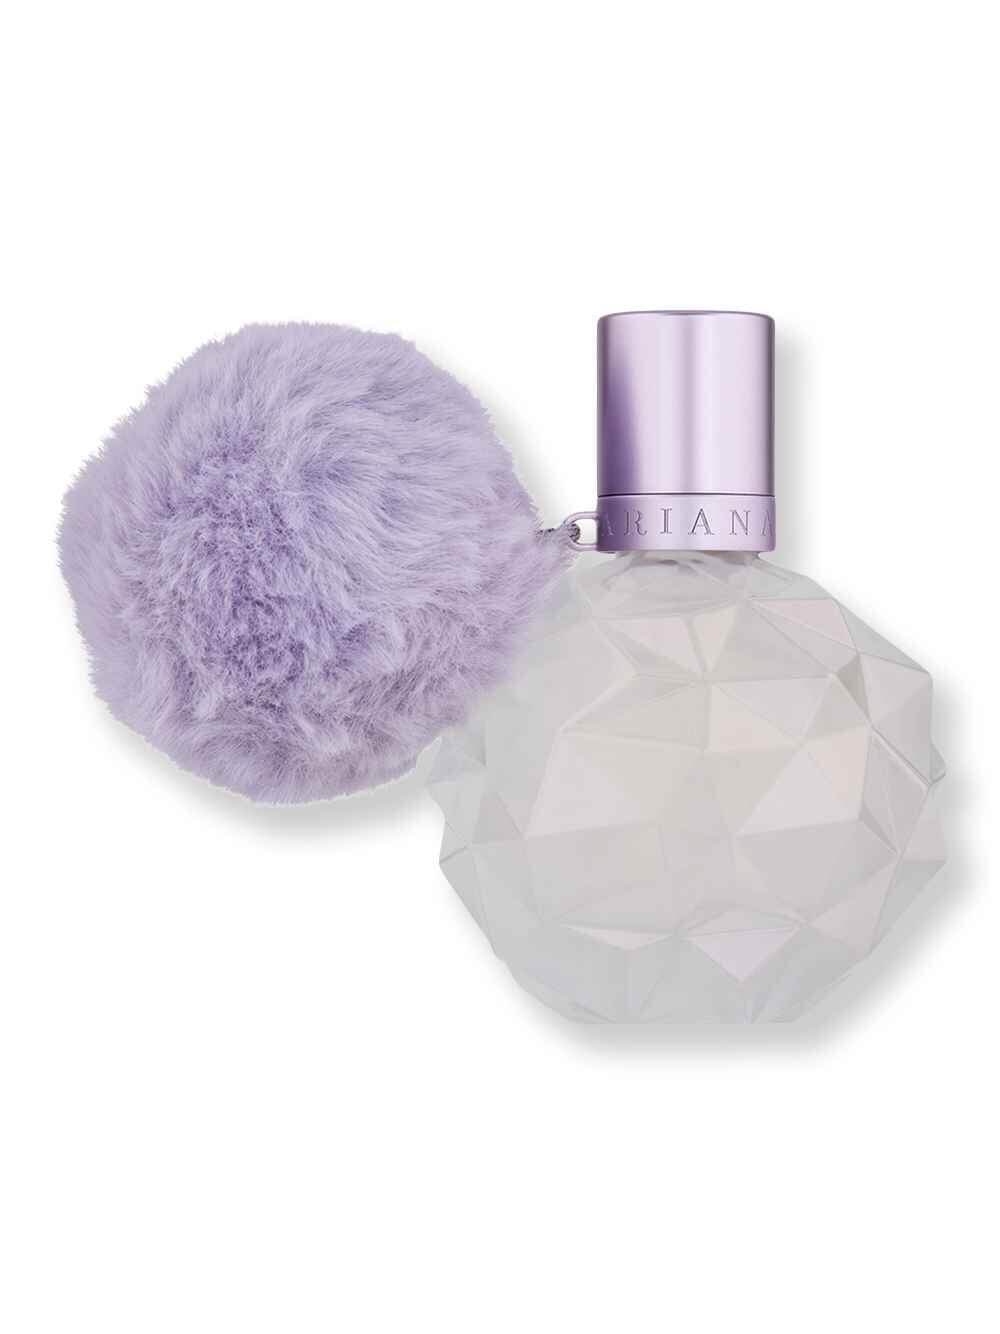 Ariana Grande Ariana Grande Moonlight Eau de Parfum 1.7 oz Perfumes & Colognes 